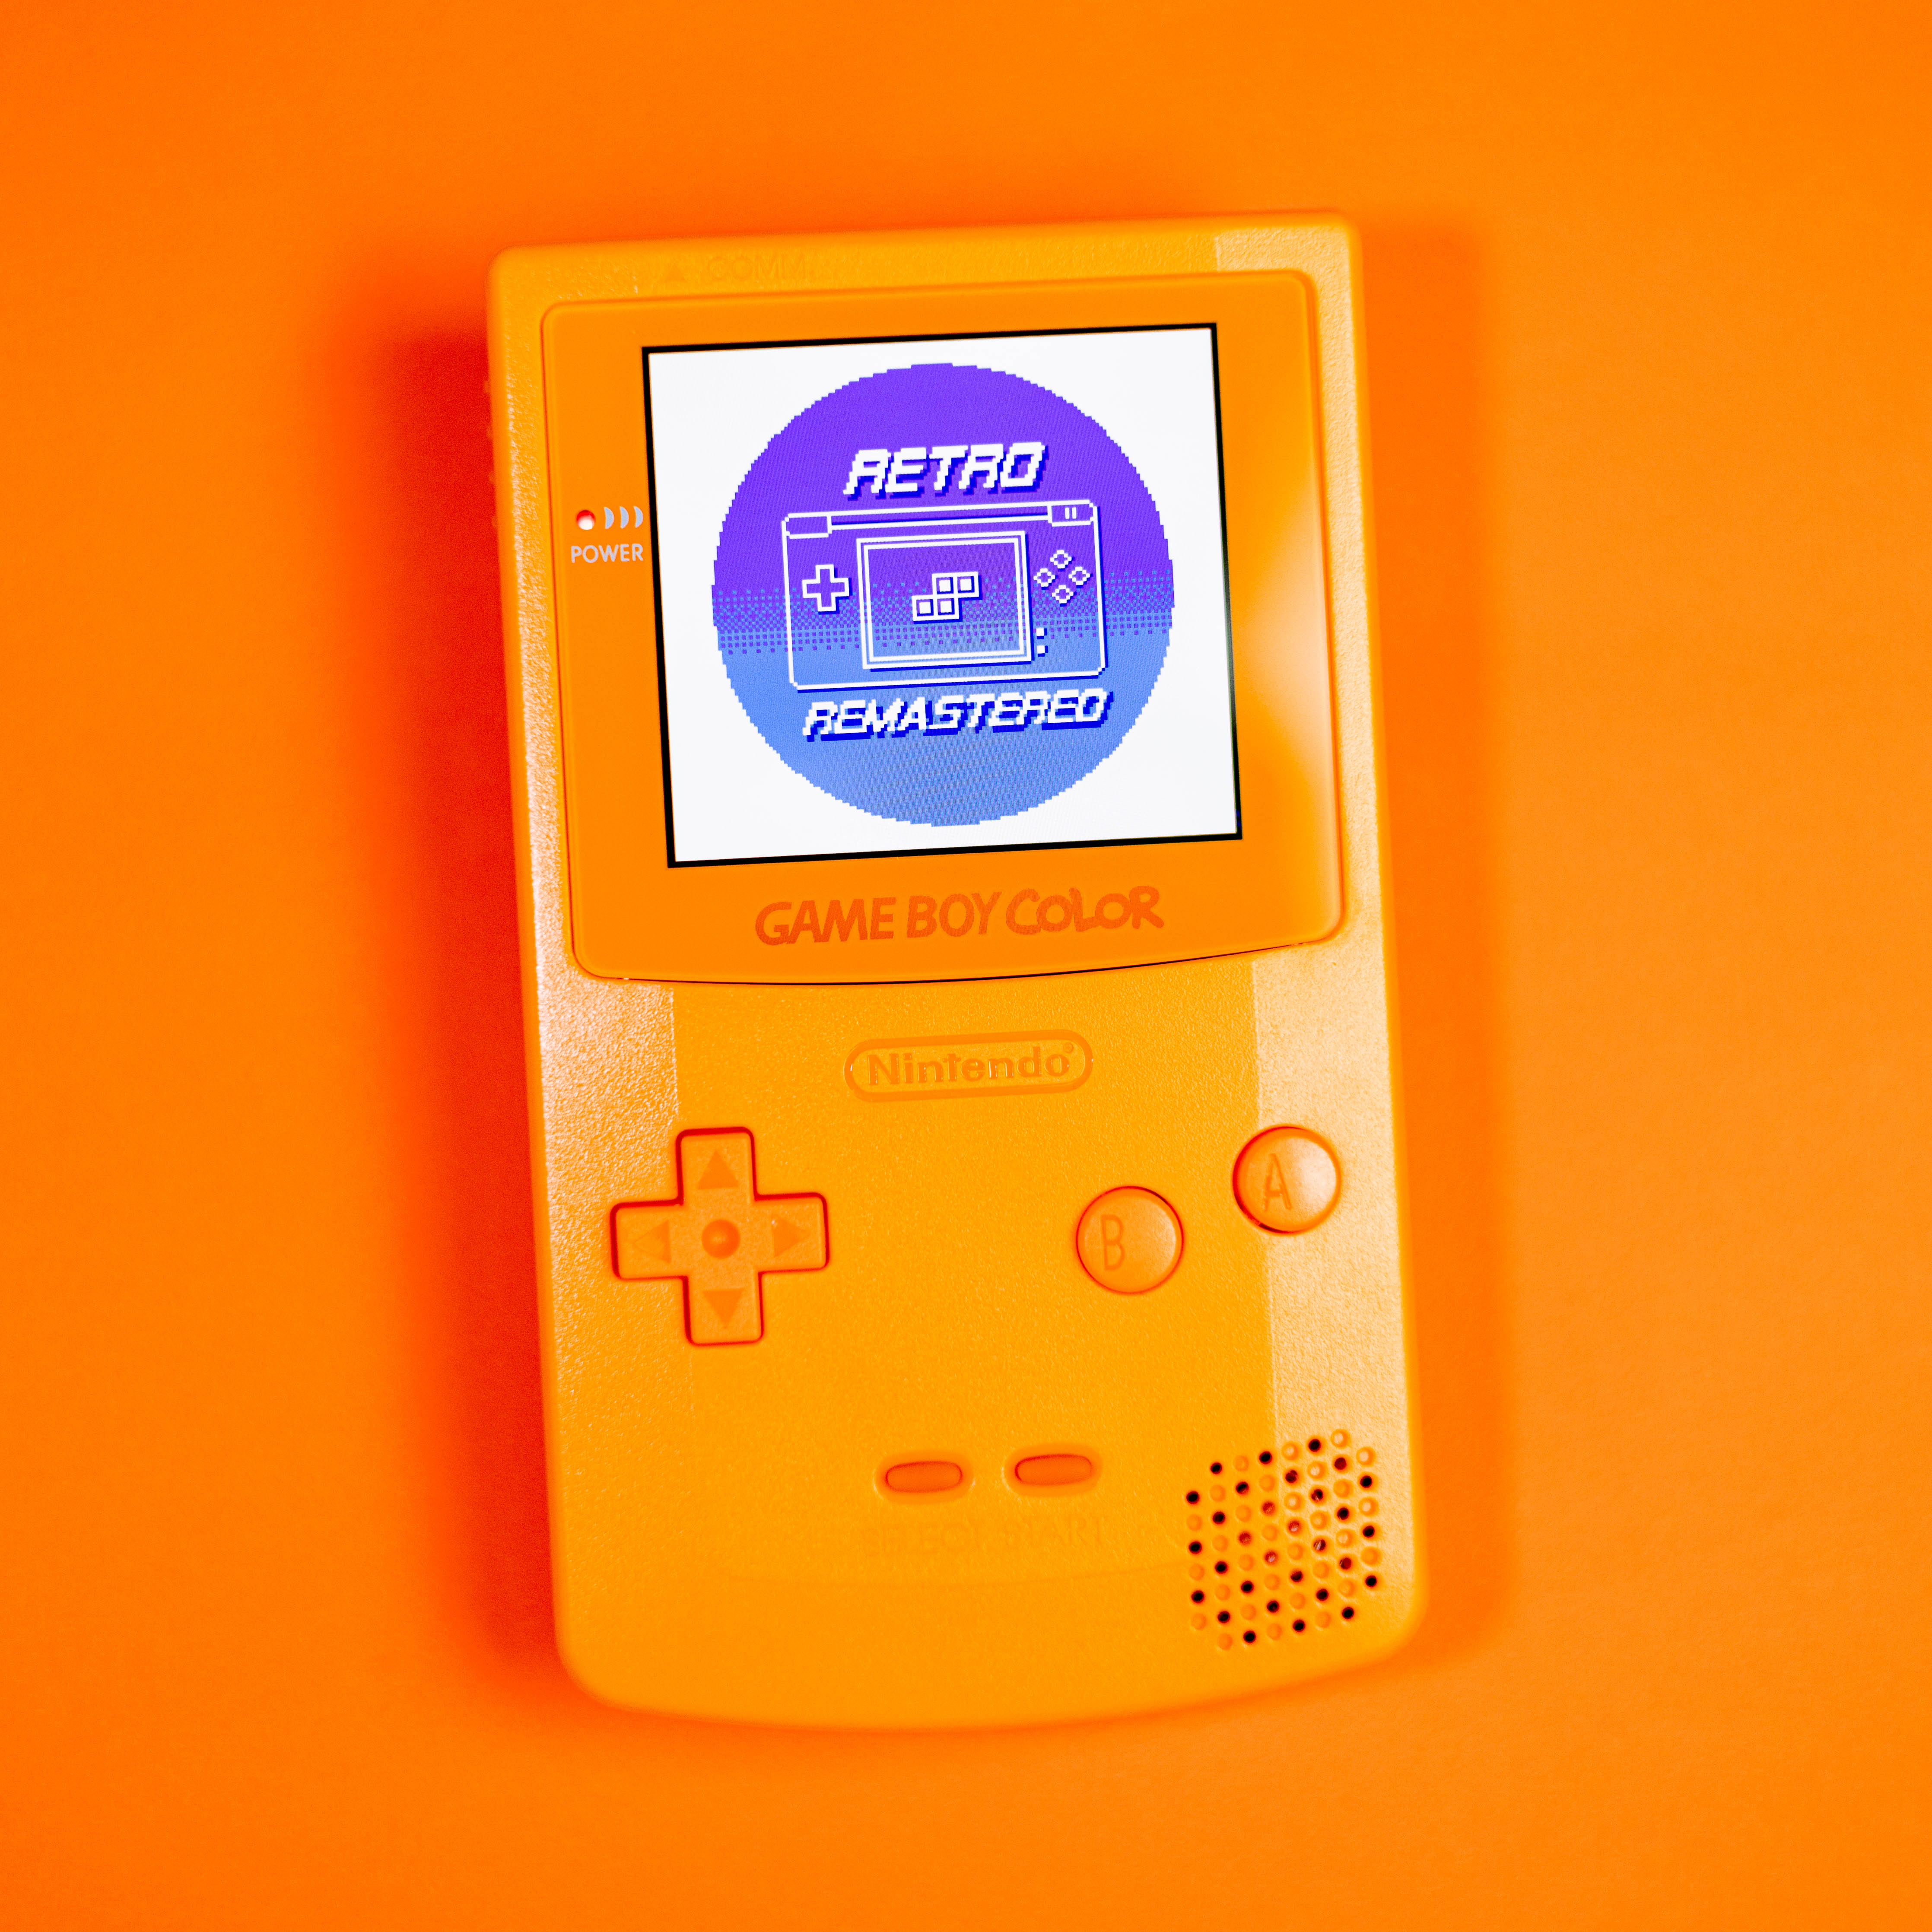 Modded Game Boy Color w/ IPS Display (All Orange)